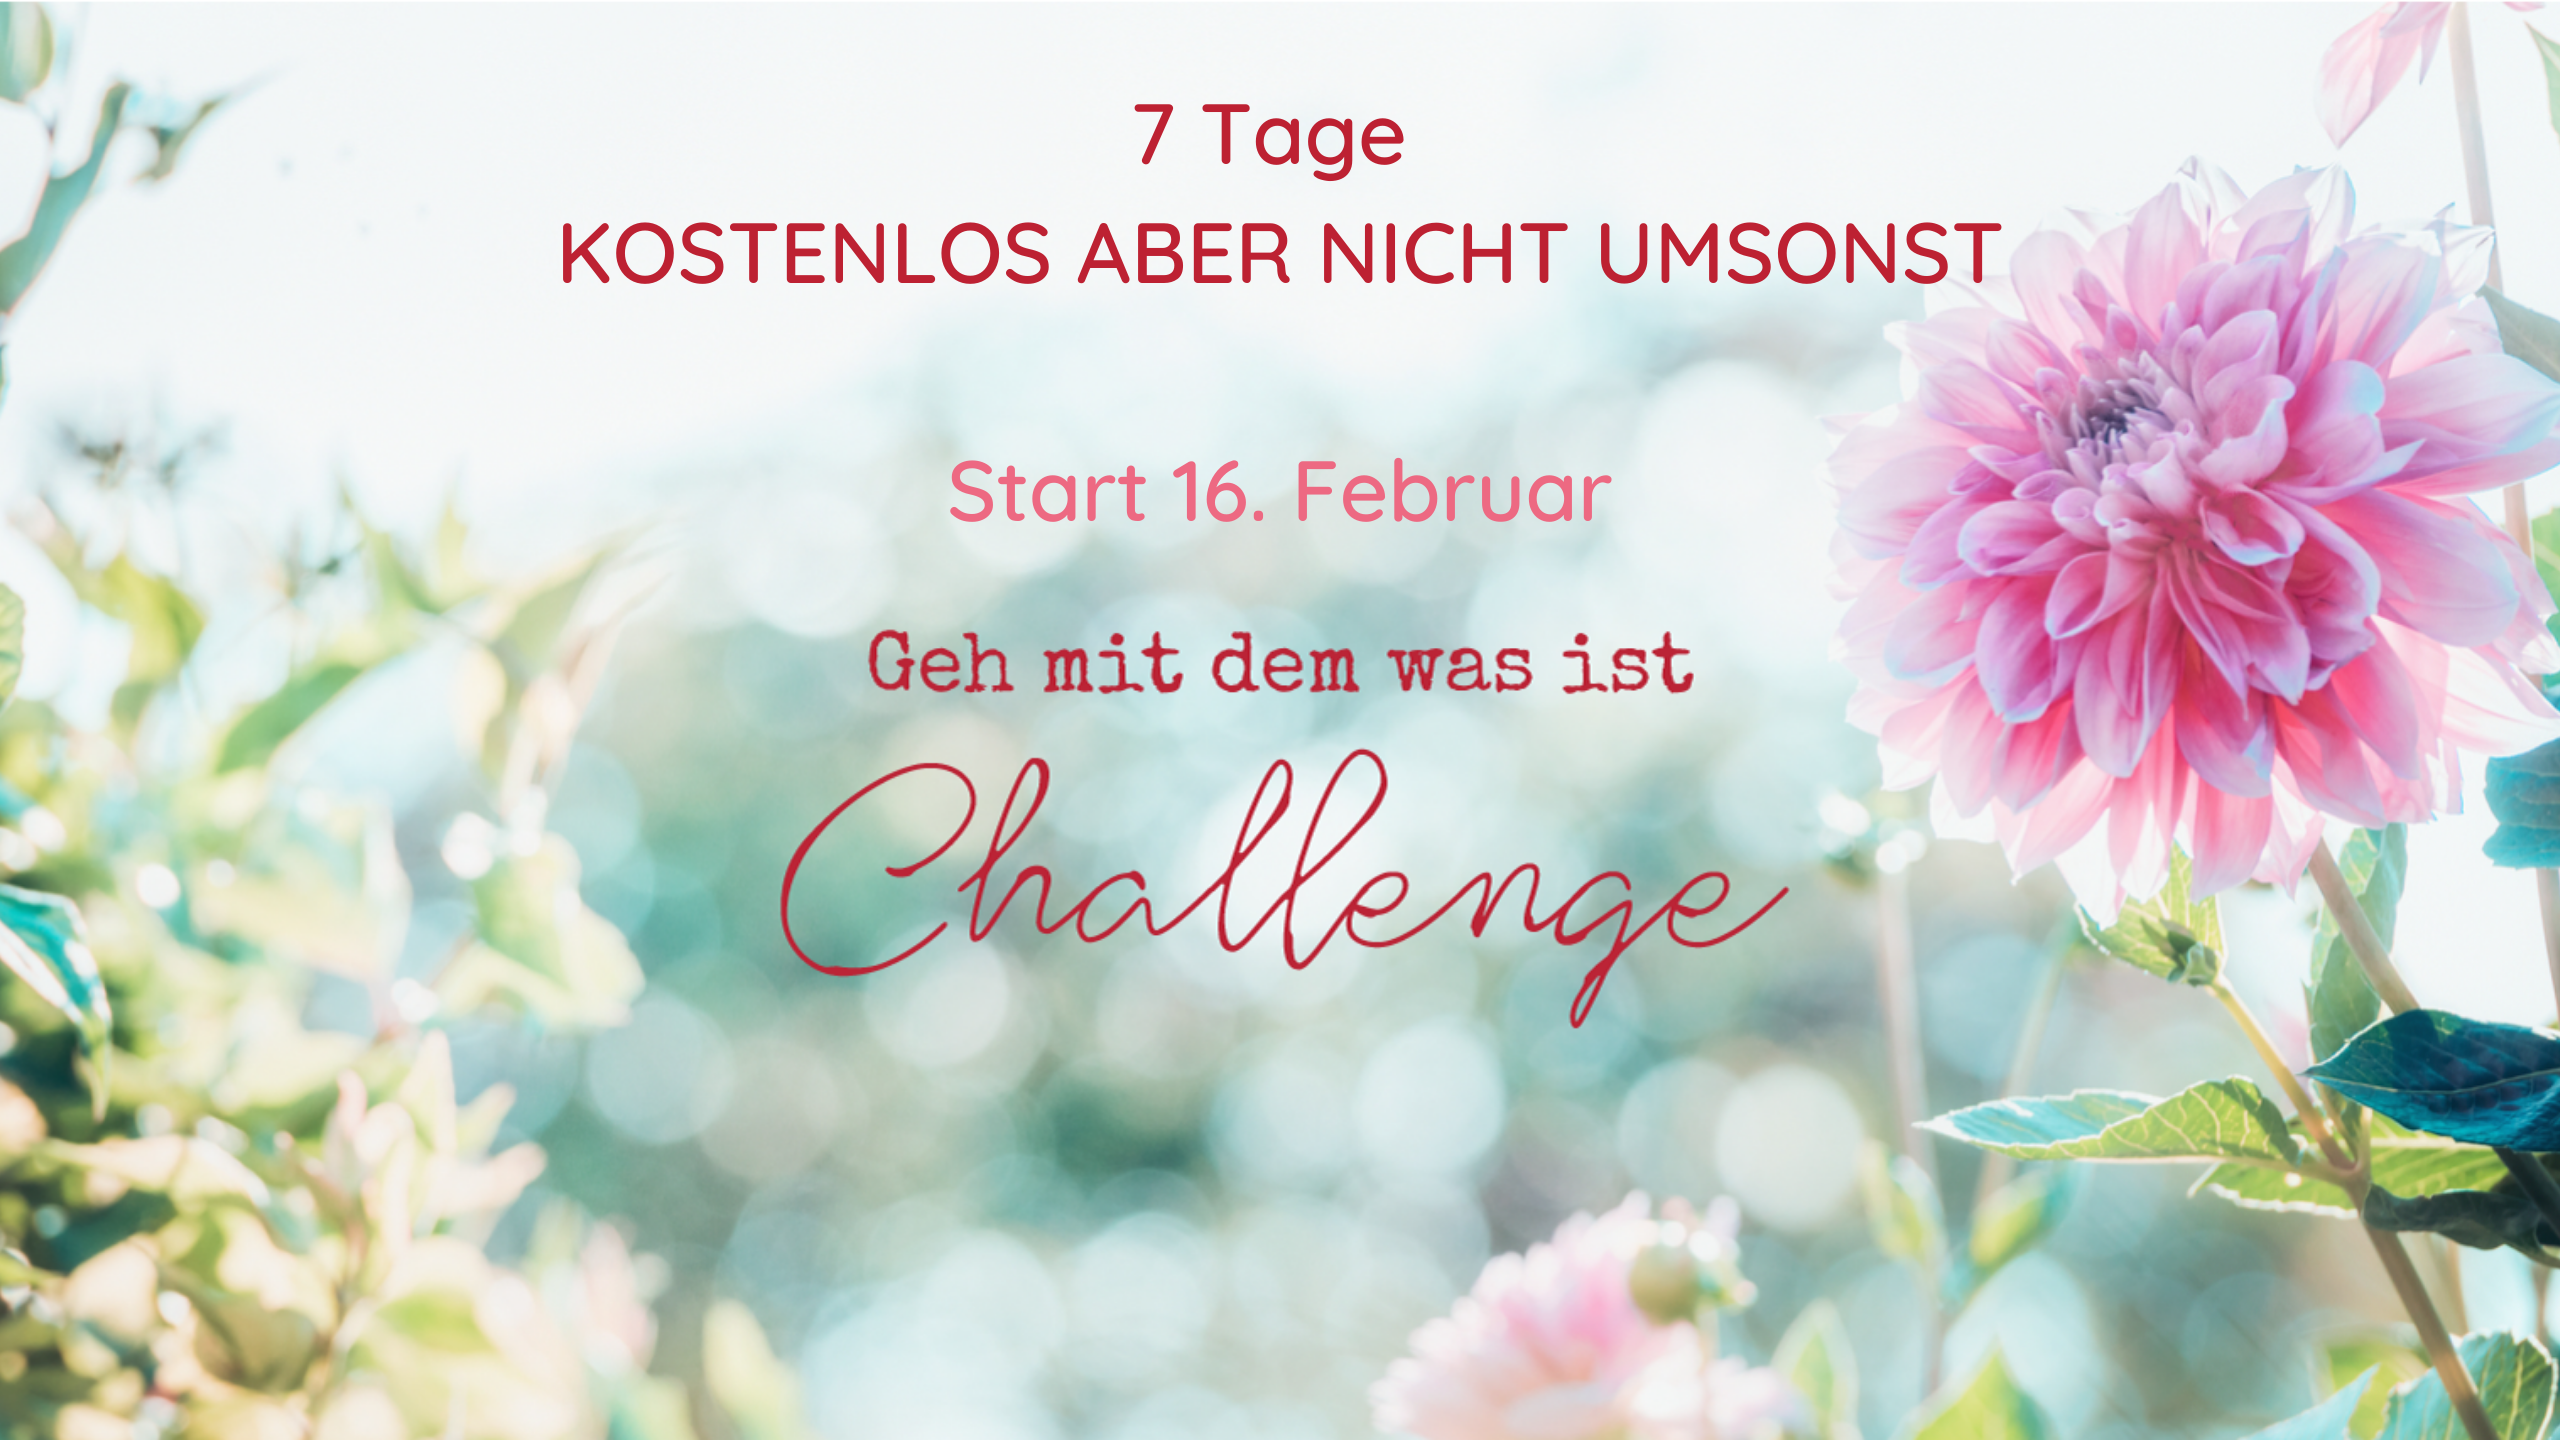 7 Tage Challenge